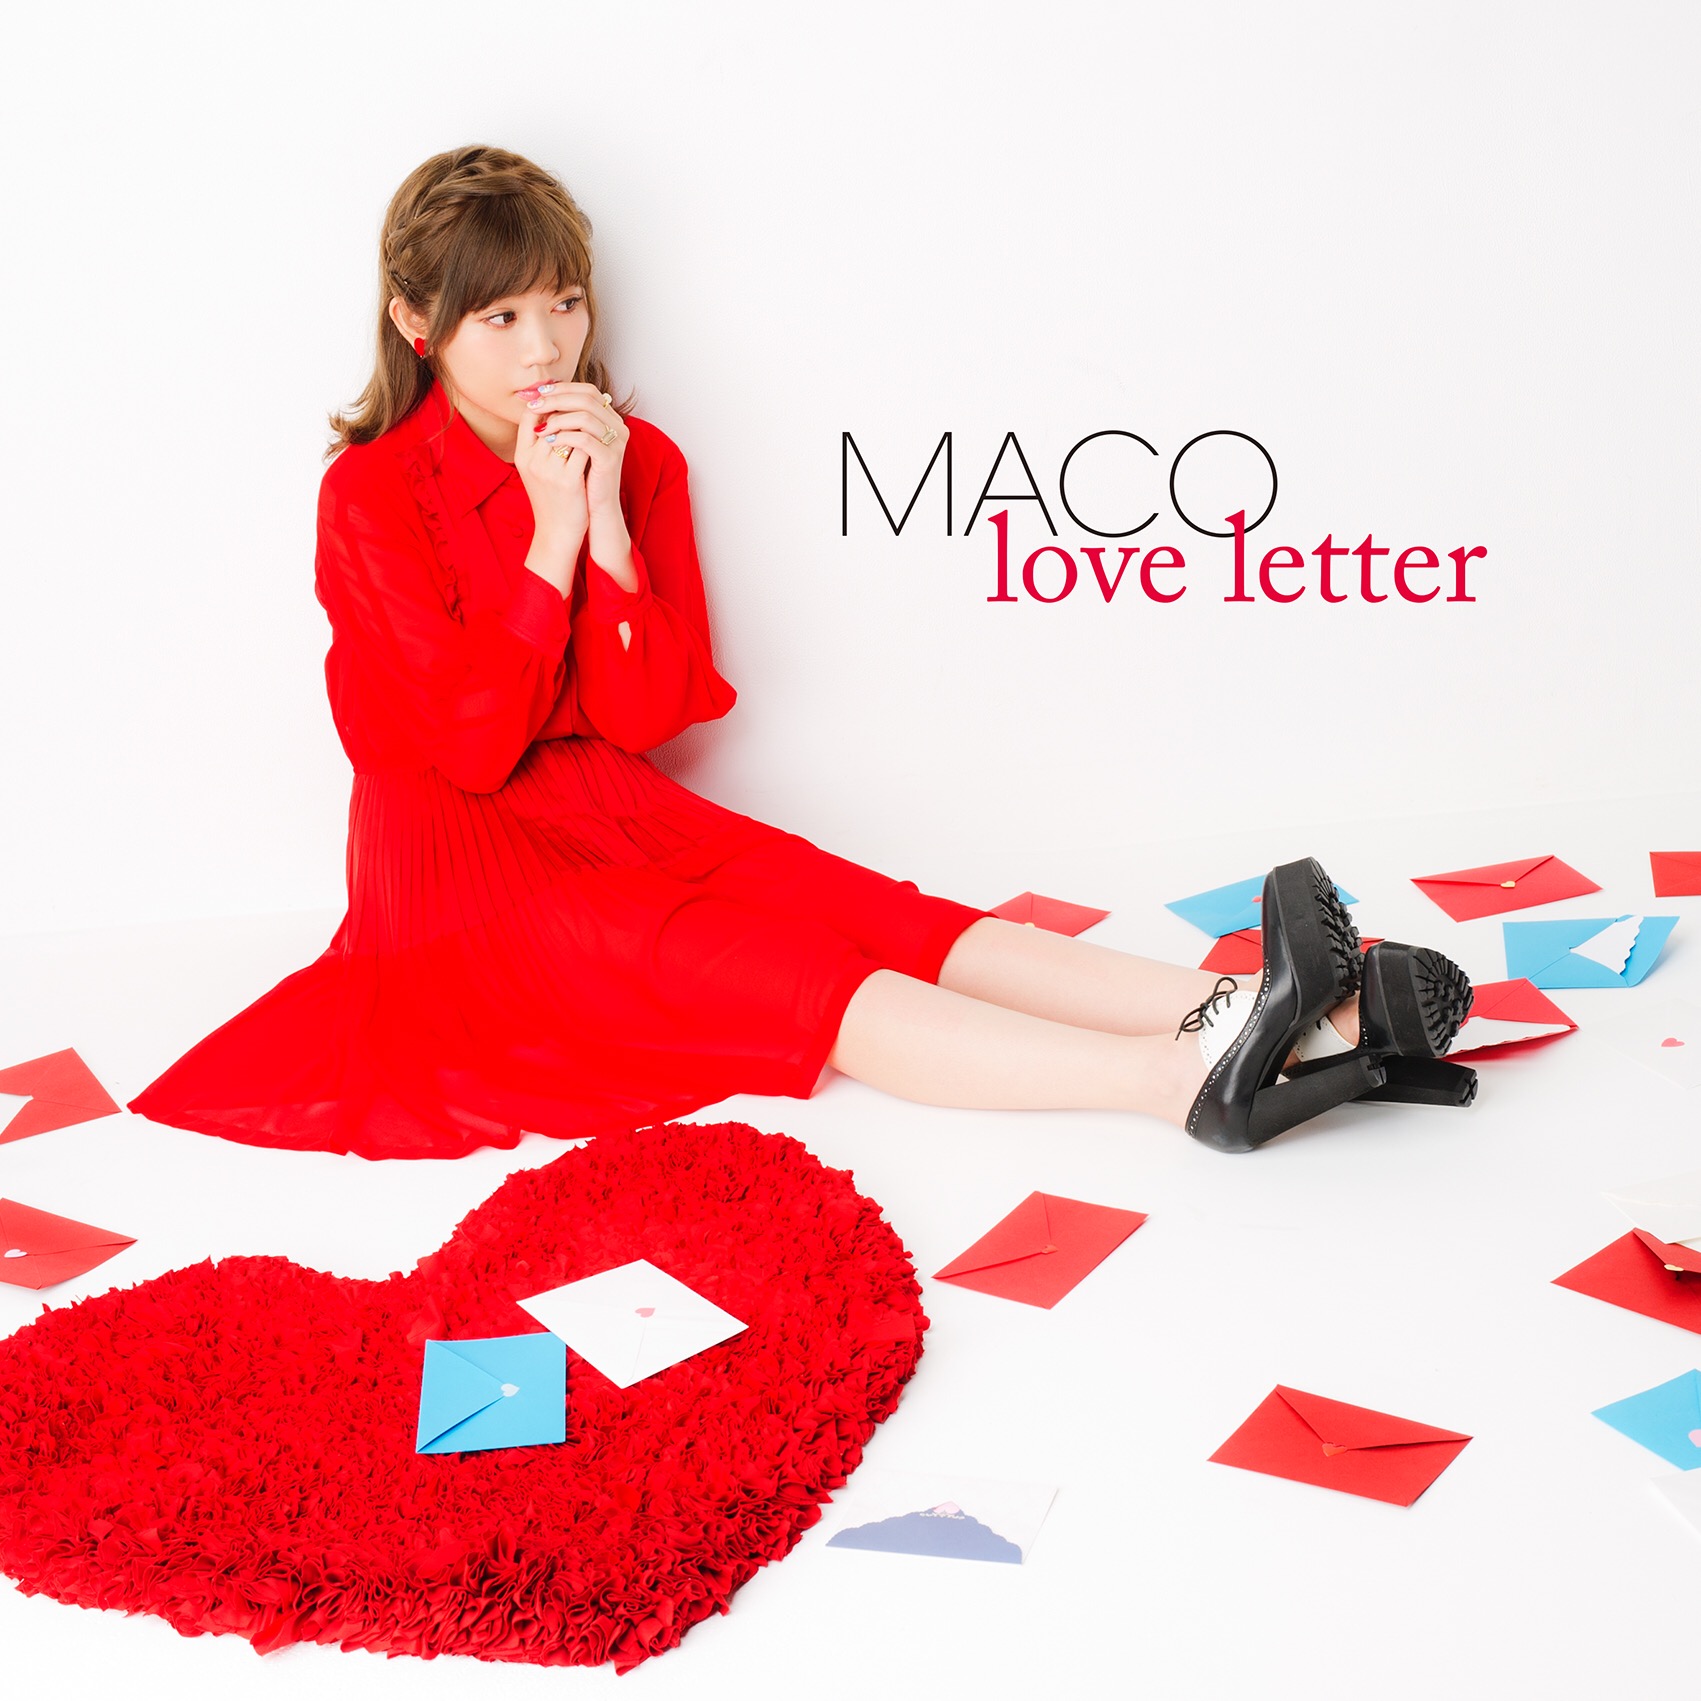 MACOアルバムタイトル曲
「love letter」